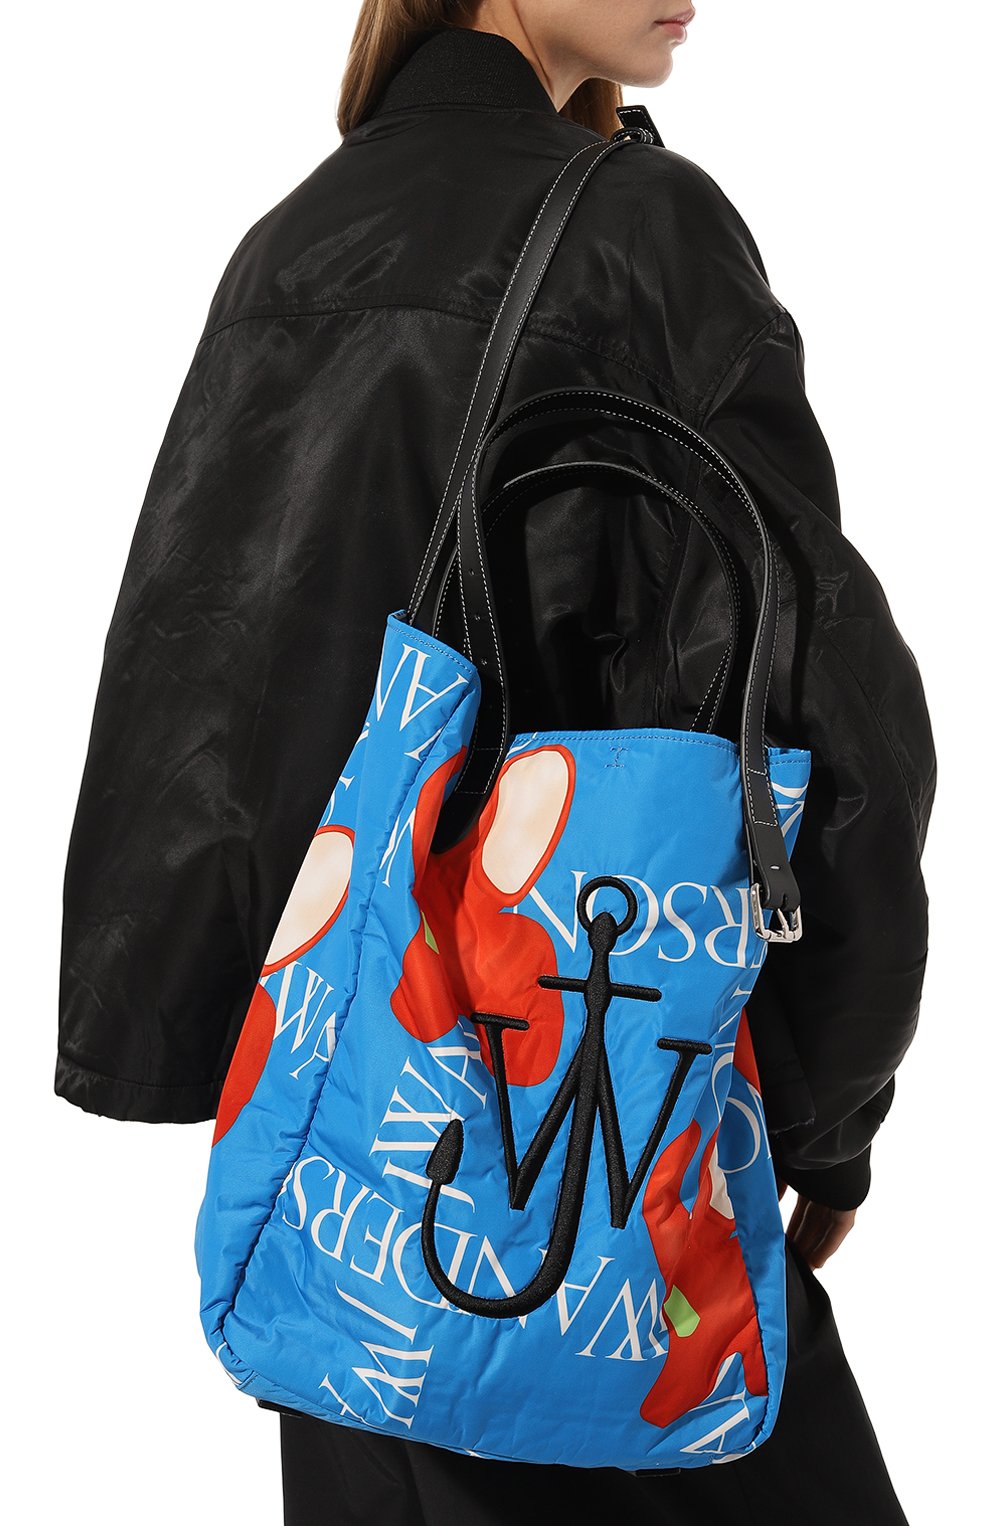 Женский сумка cabas JW ANDERSON синего цвета, арт. HB0472FA0162 800 | Фото 2 (Сумки-технические: Сумки-шопперы; Материал сплава: Проставлено; Материал: Текстиль; Драгоценные камни: Проставлено; Размер: large)